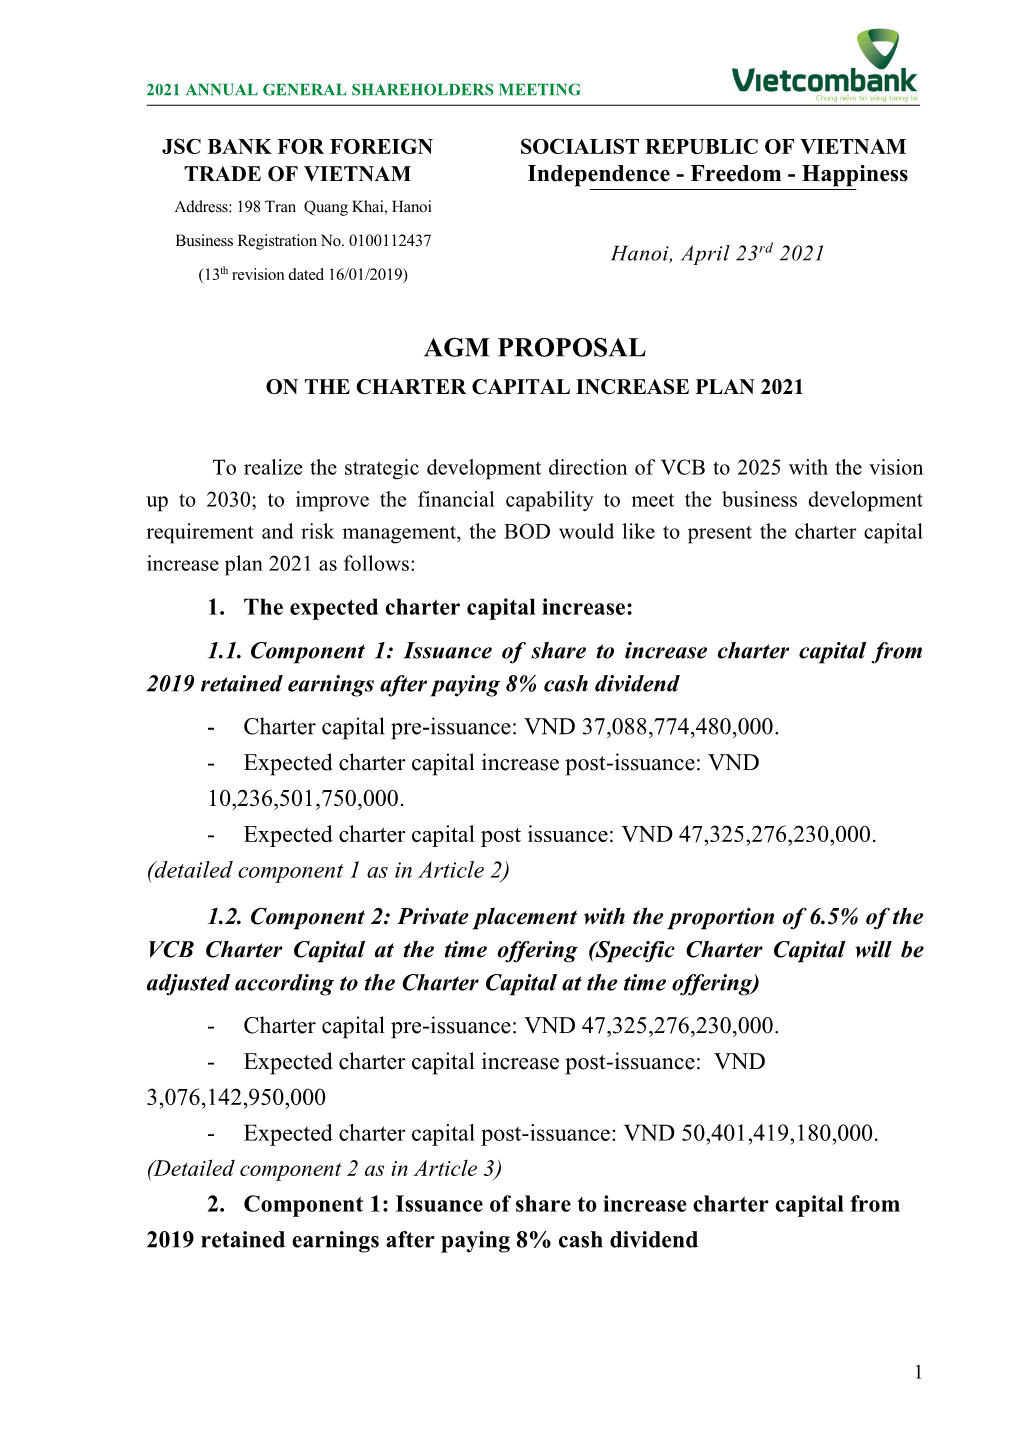 14. Proposal on Charter Capital Increase Plan 2021